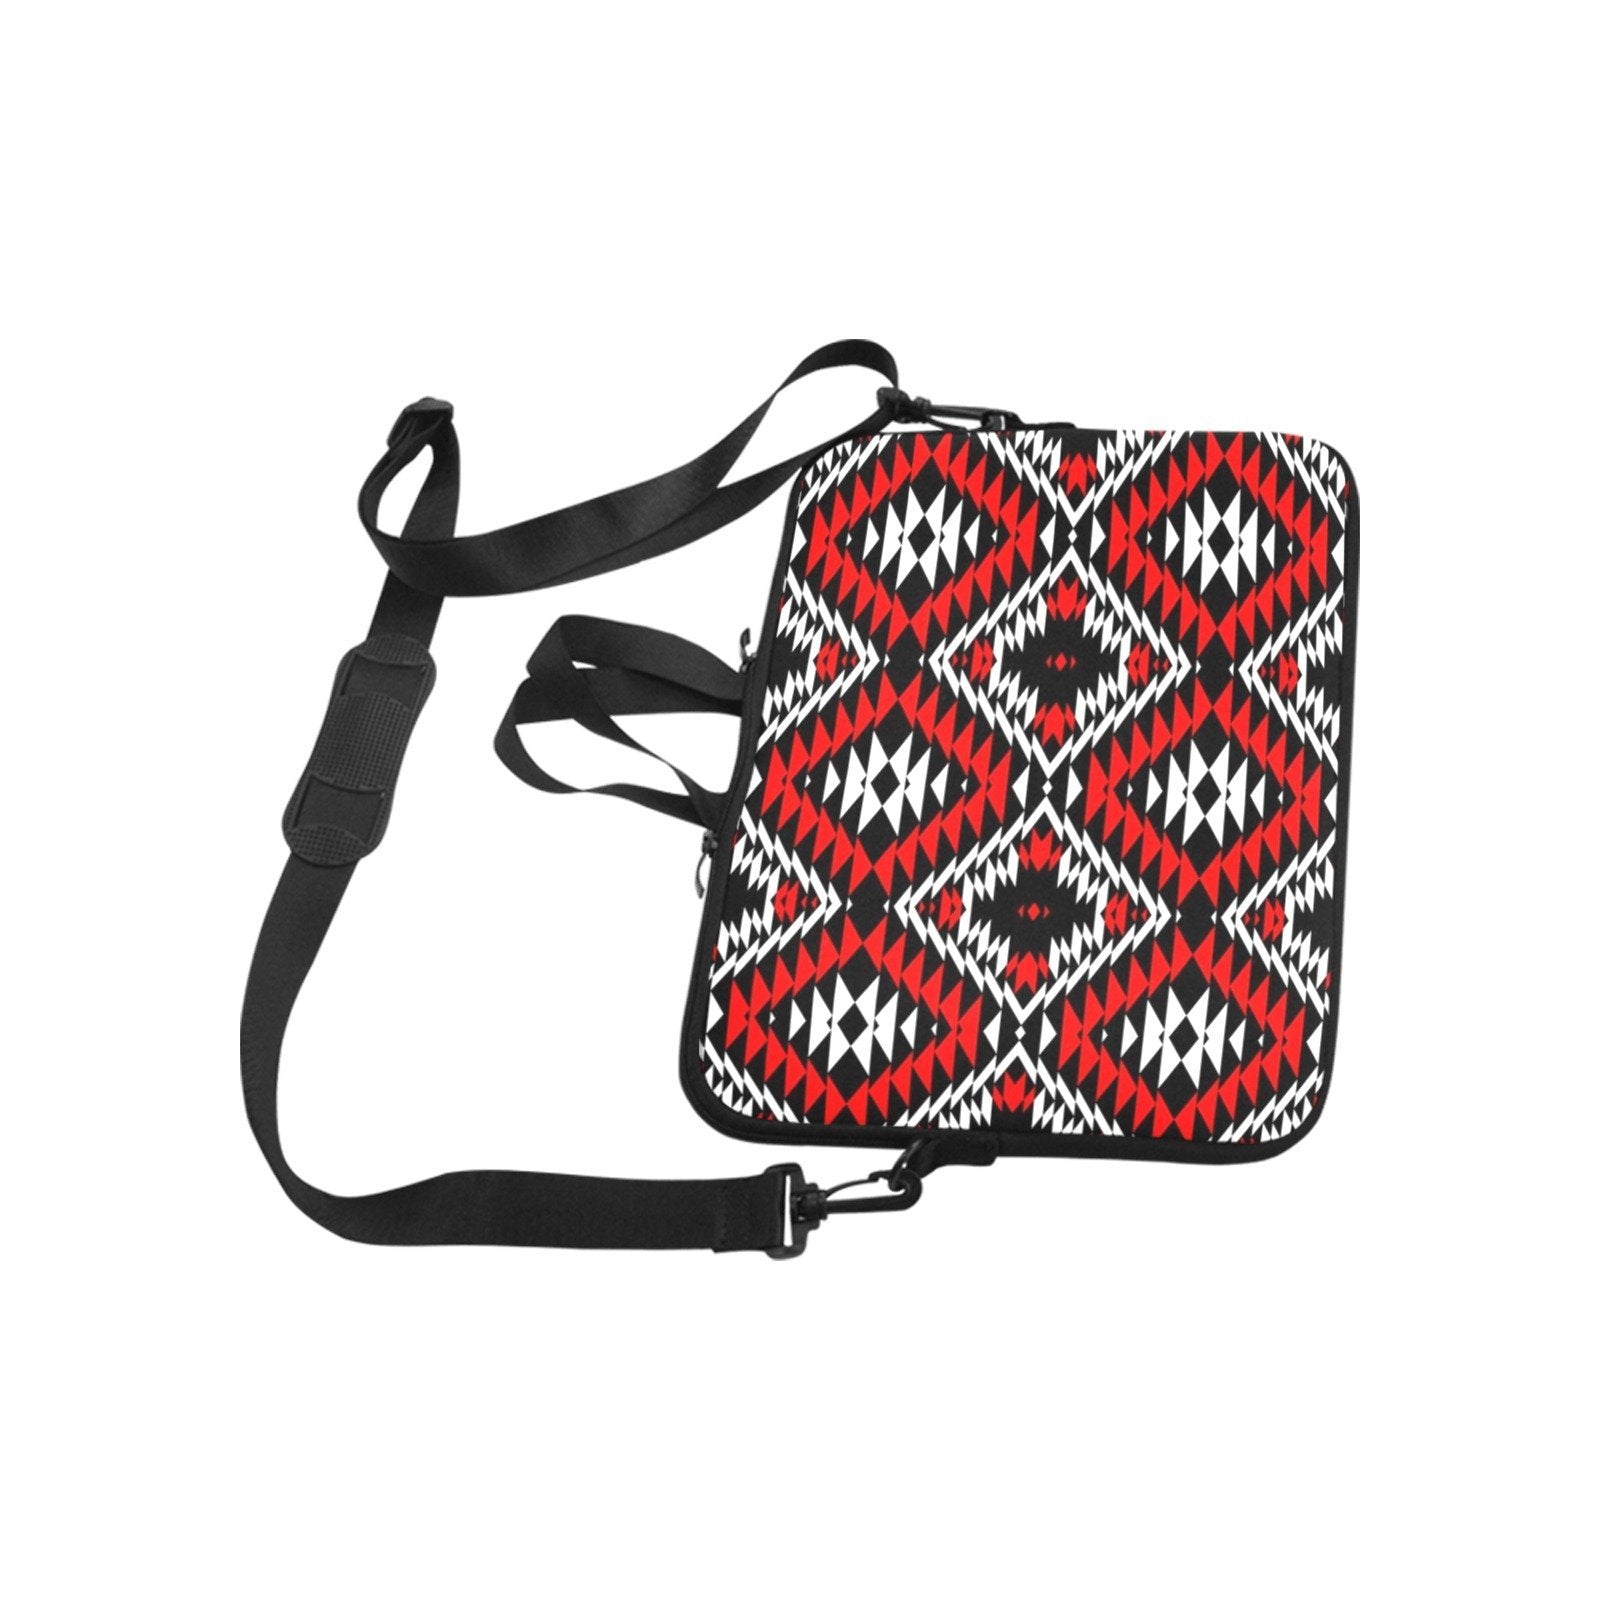 Taos Wool Laptop Handbags 10" bag e-joyer 